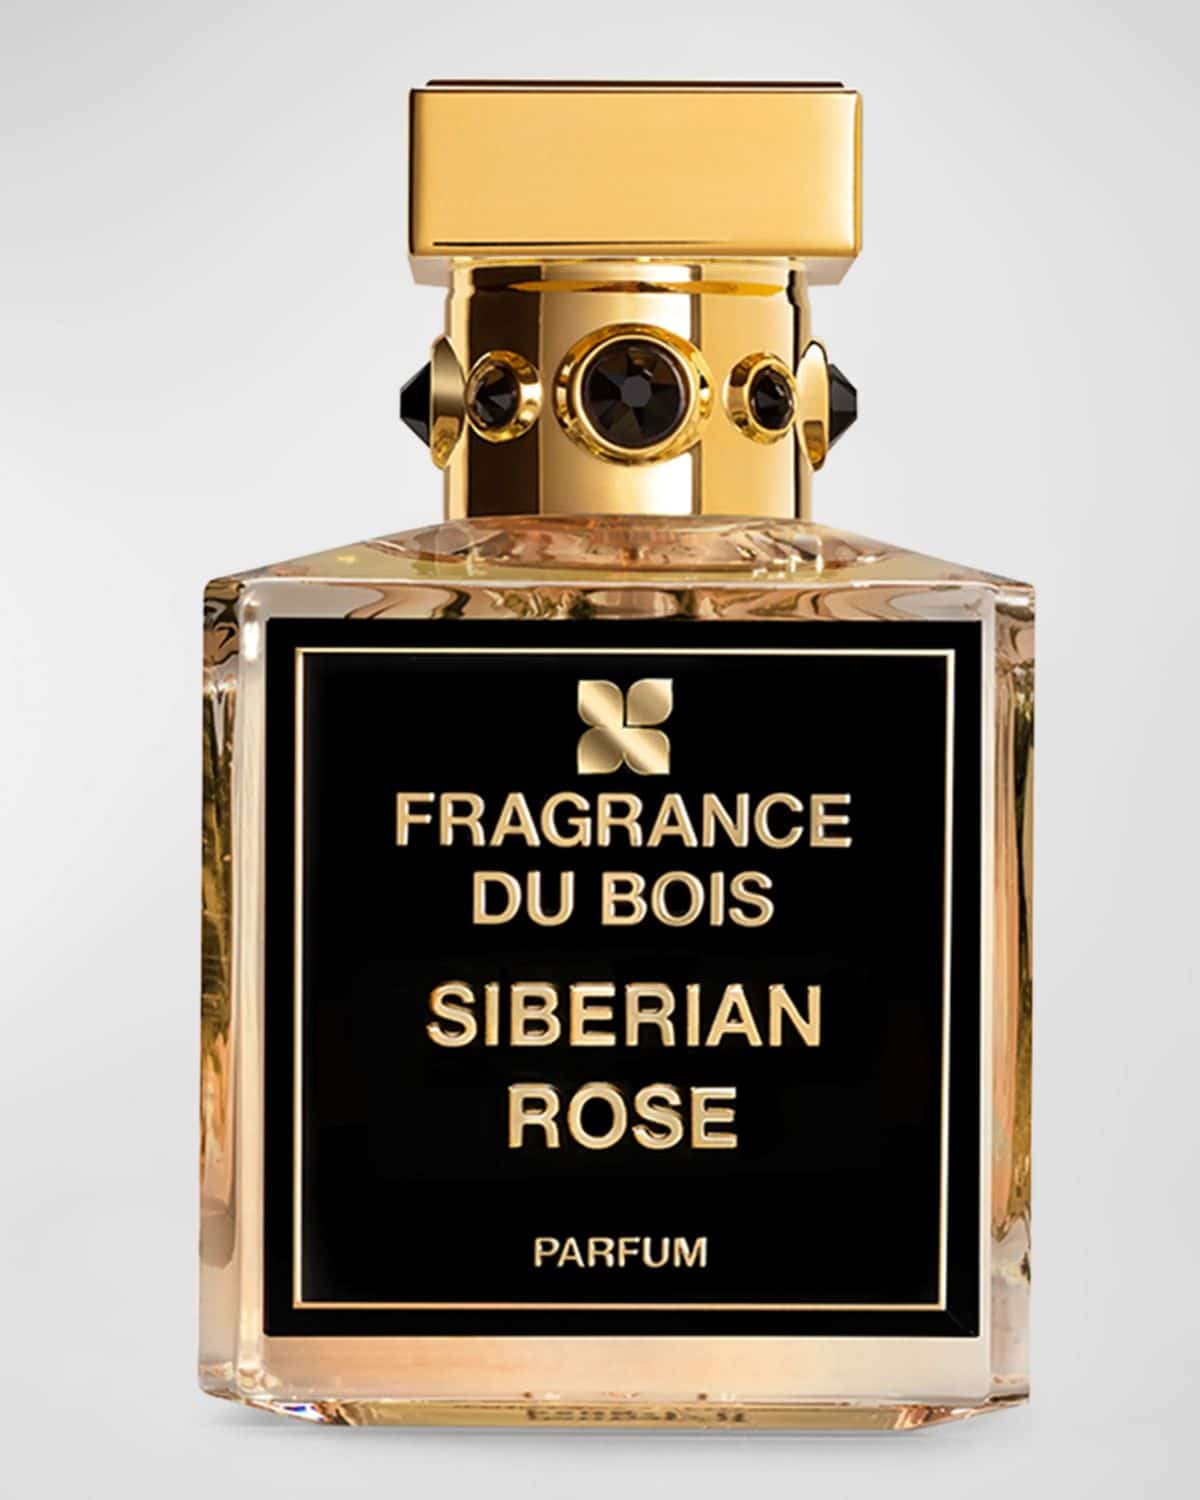 Fragrance Du Bois
Siberian Rose Parfum, 3.4 oz.